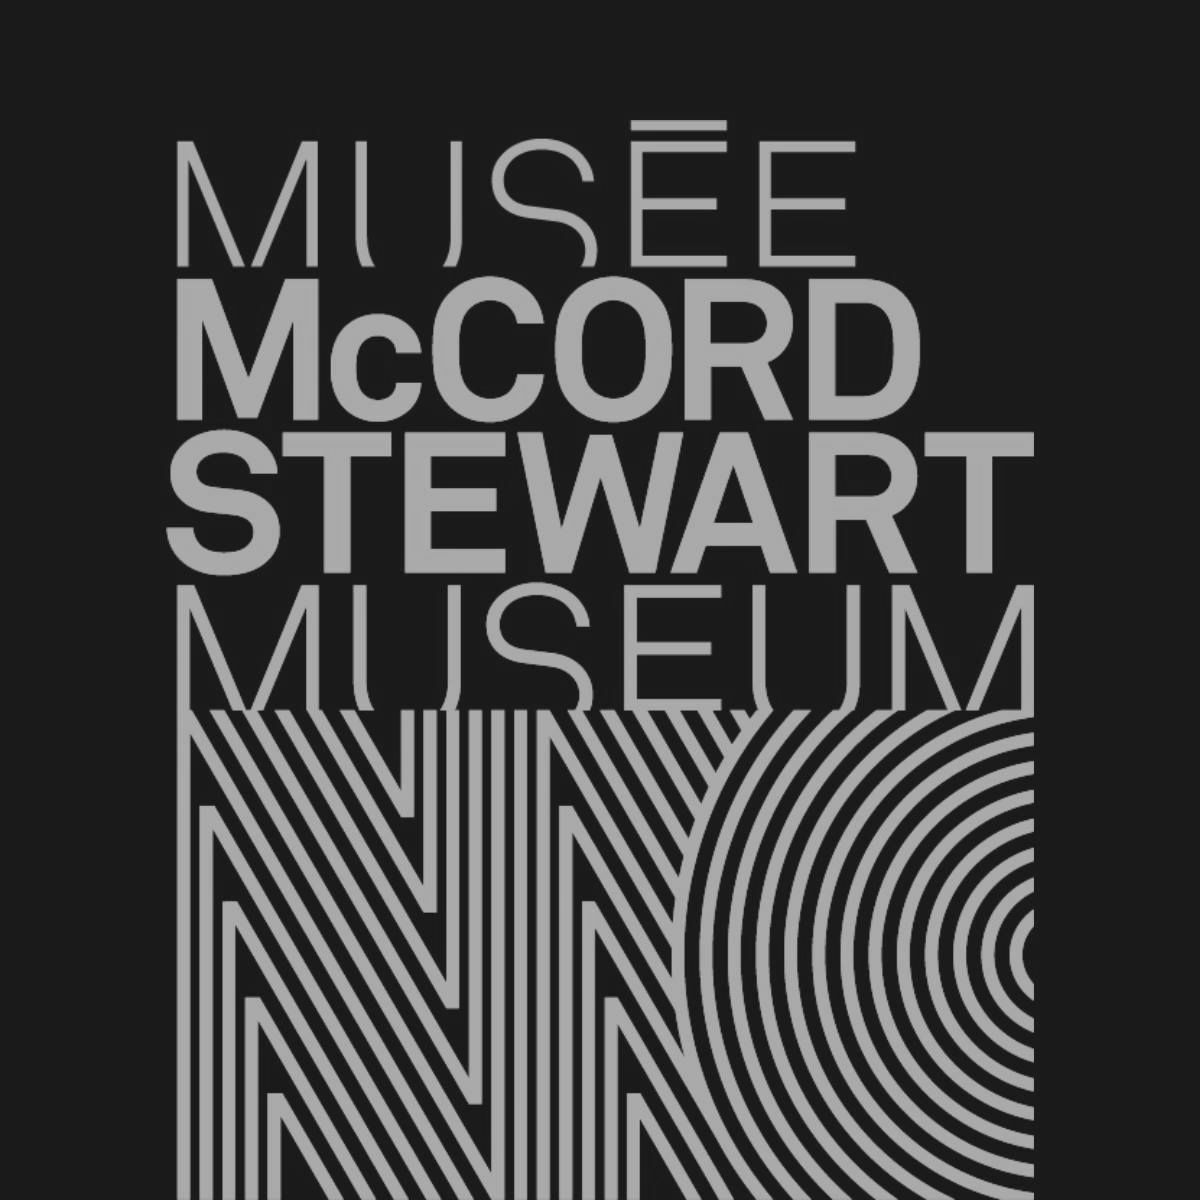 Musée McCORD STEWART